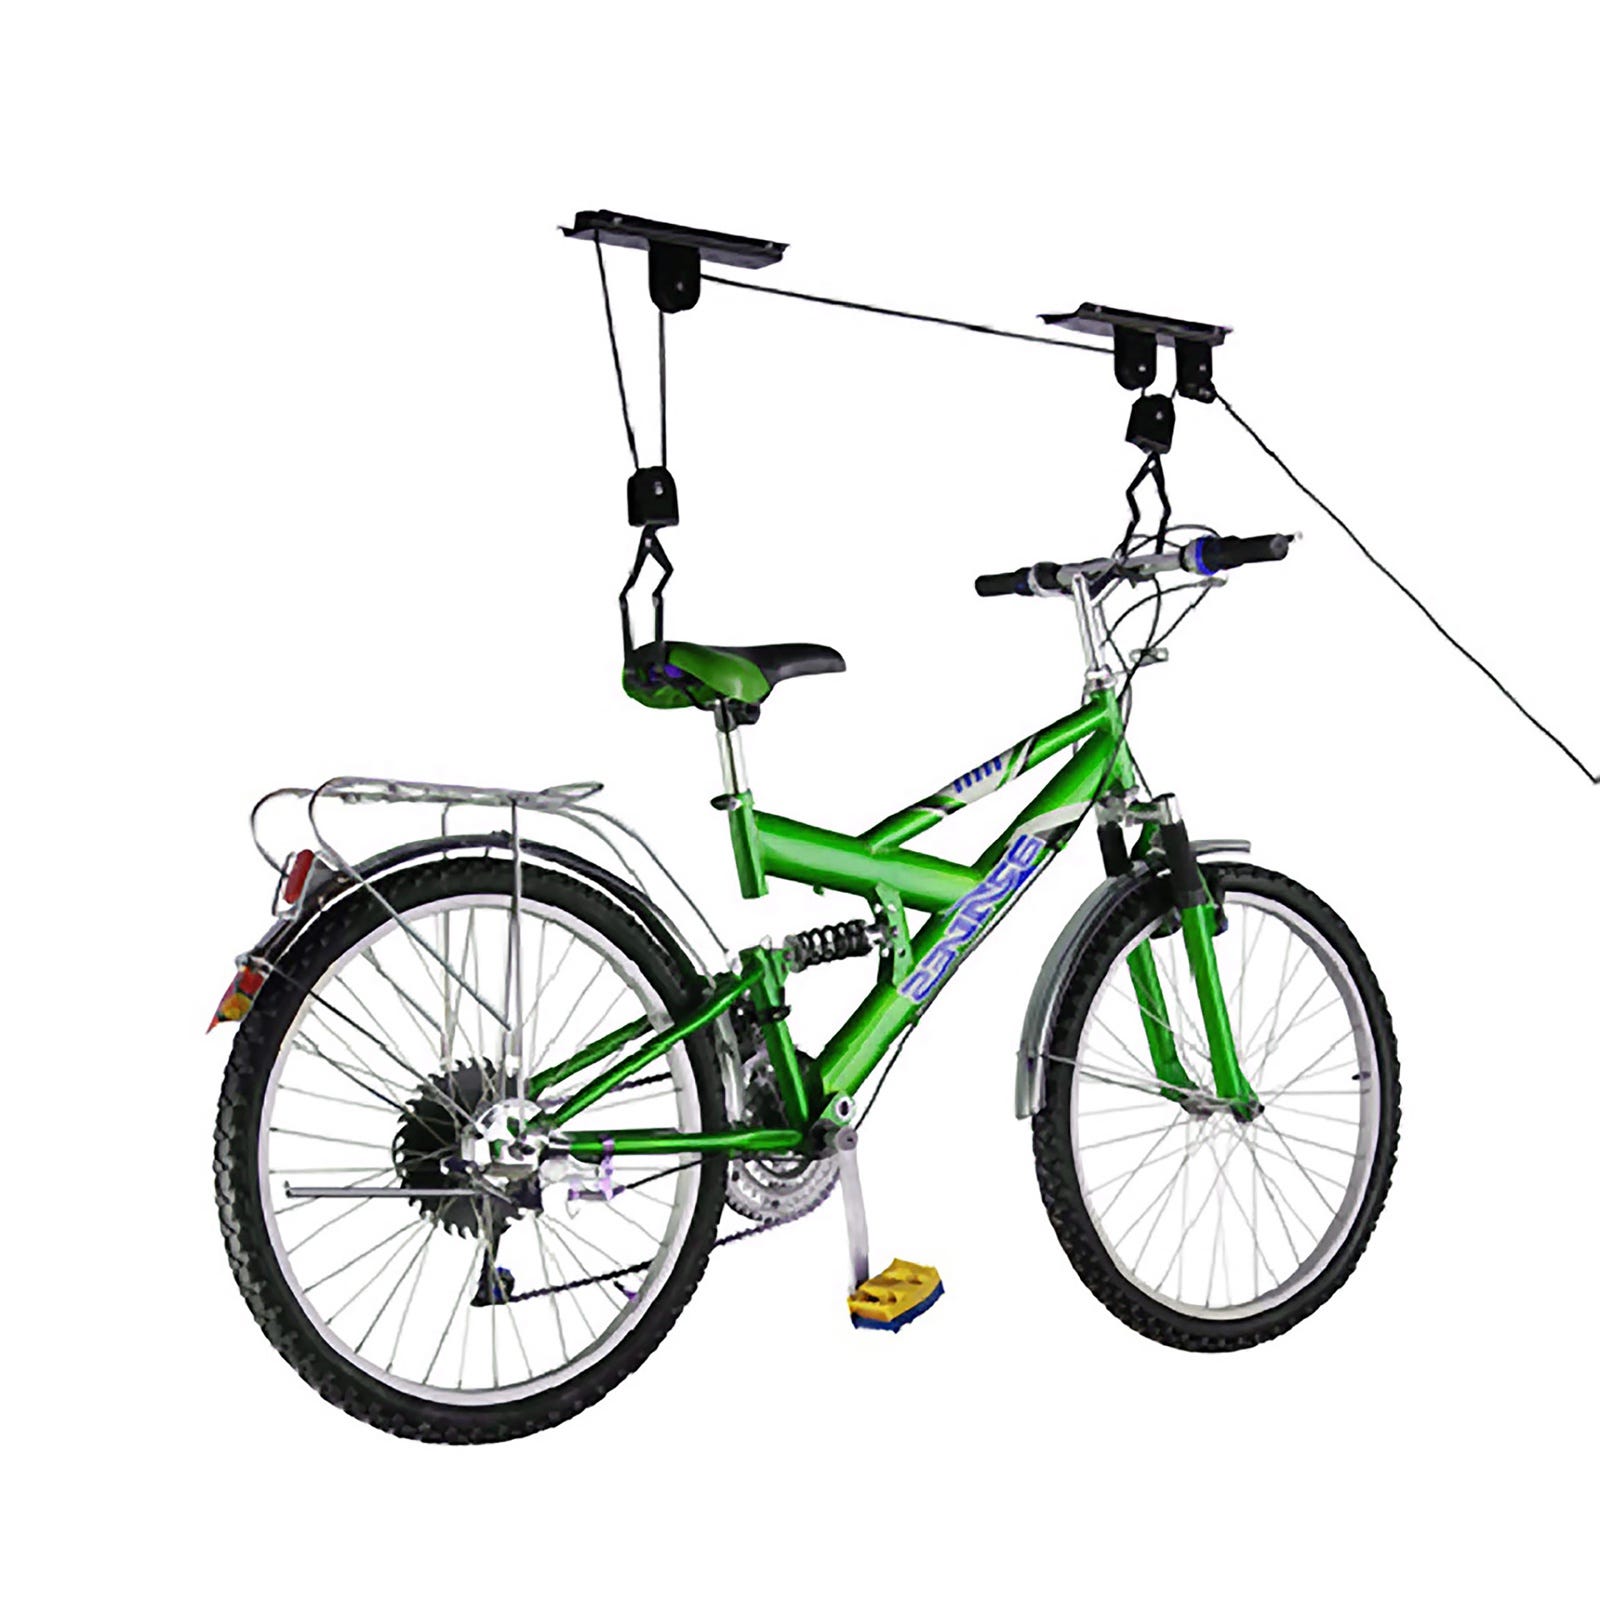 2 Kit herramientas para bicicleta : 80,00 €